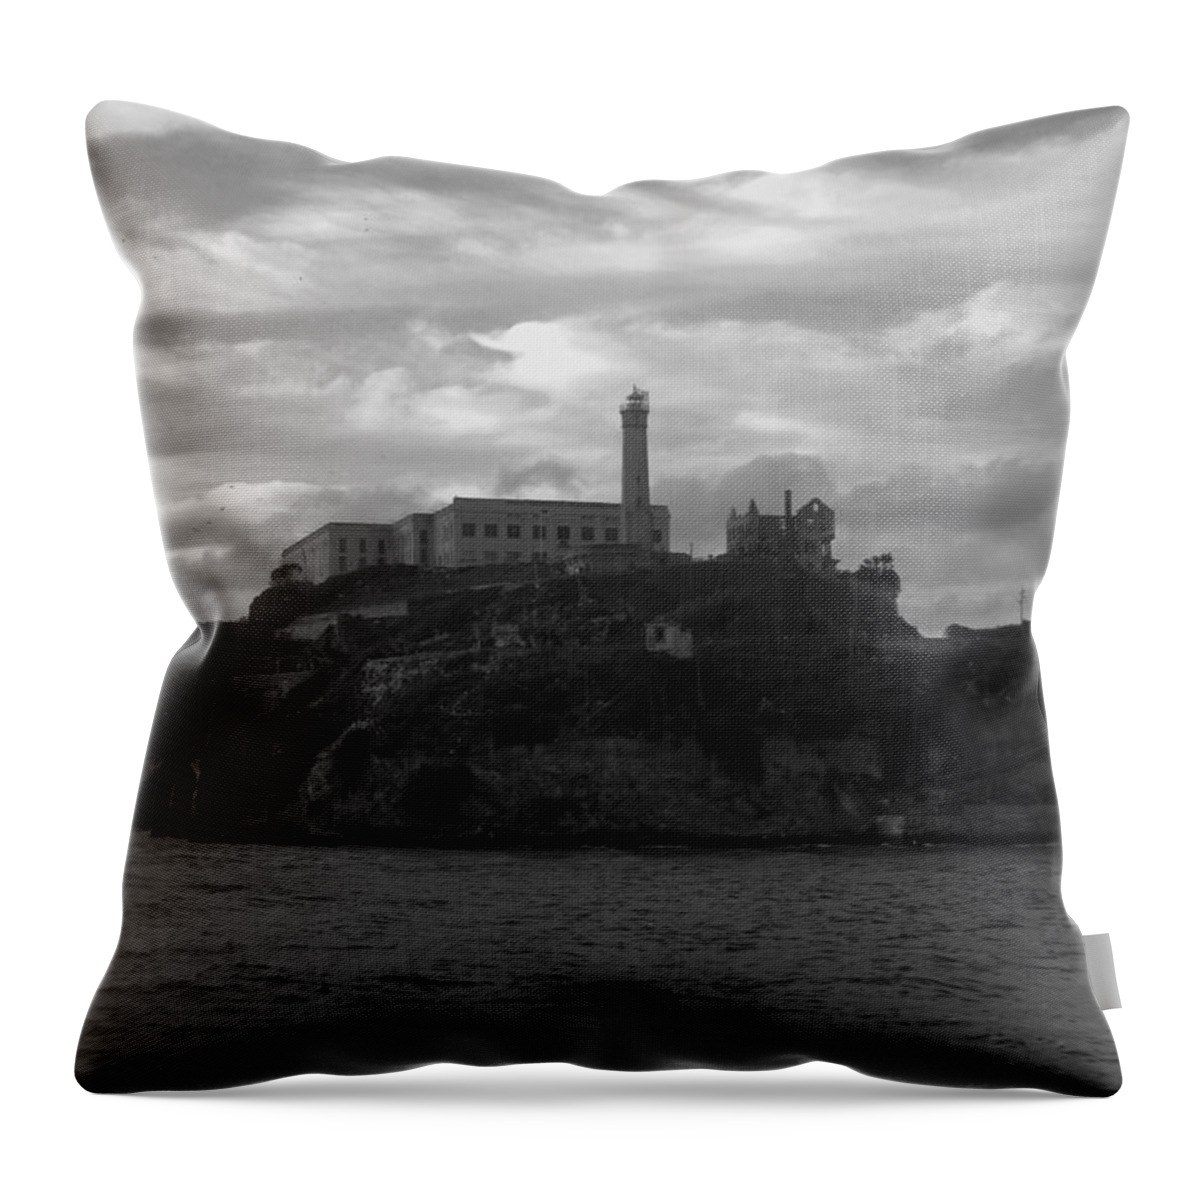 Alcatraz Throw Pillow featuring the photograph Alcatraz Island B n W by Richard Andrews